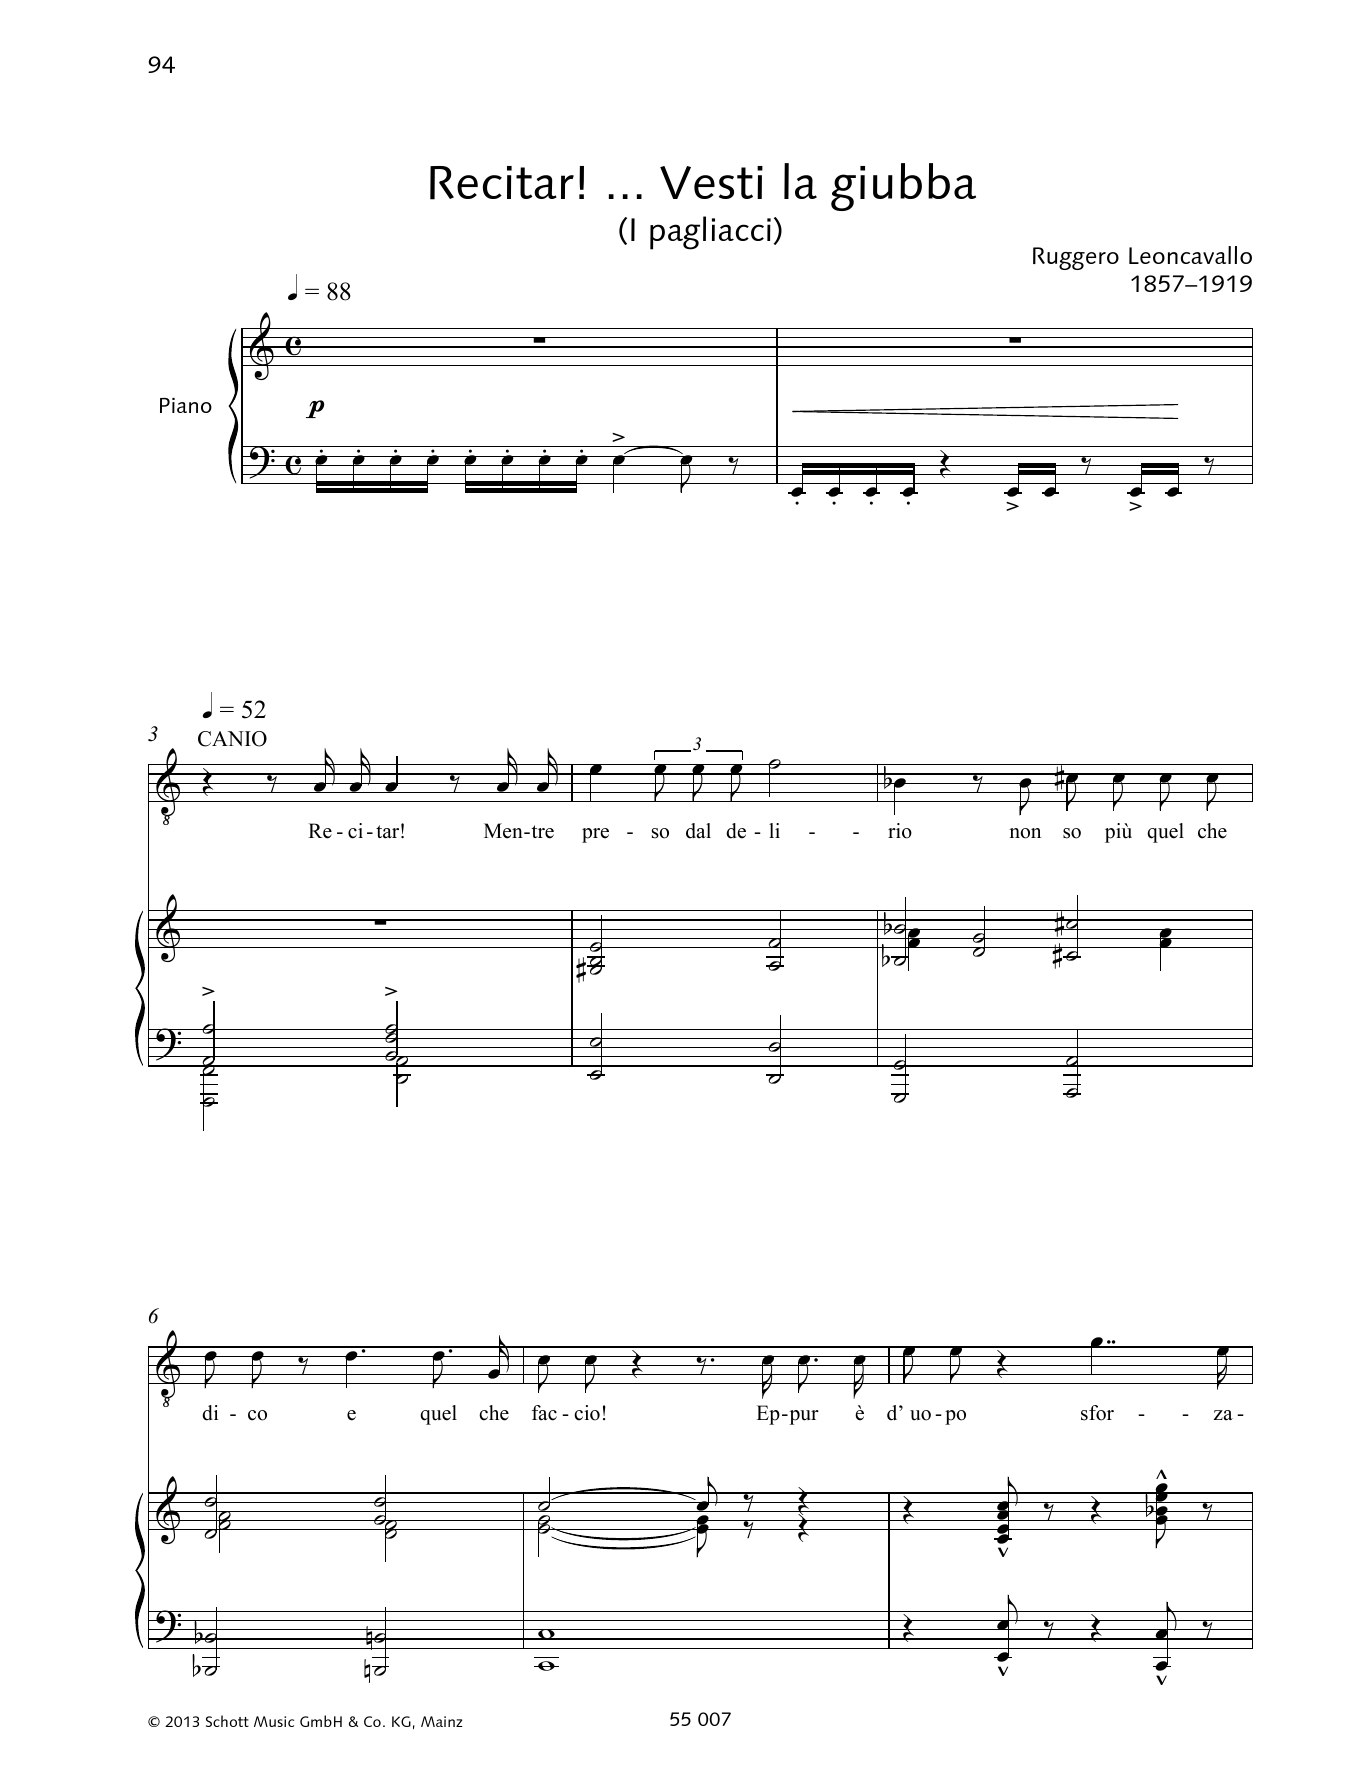 Francesca Licciarda Recitar! ... Vesti la giubba Sheet Music Notes & Chords for Piano & Vocal - Download or Print PDF